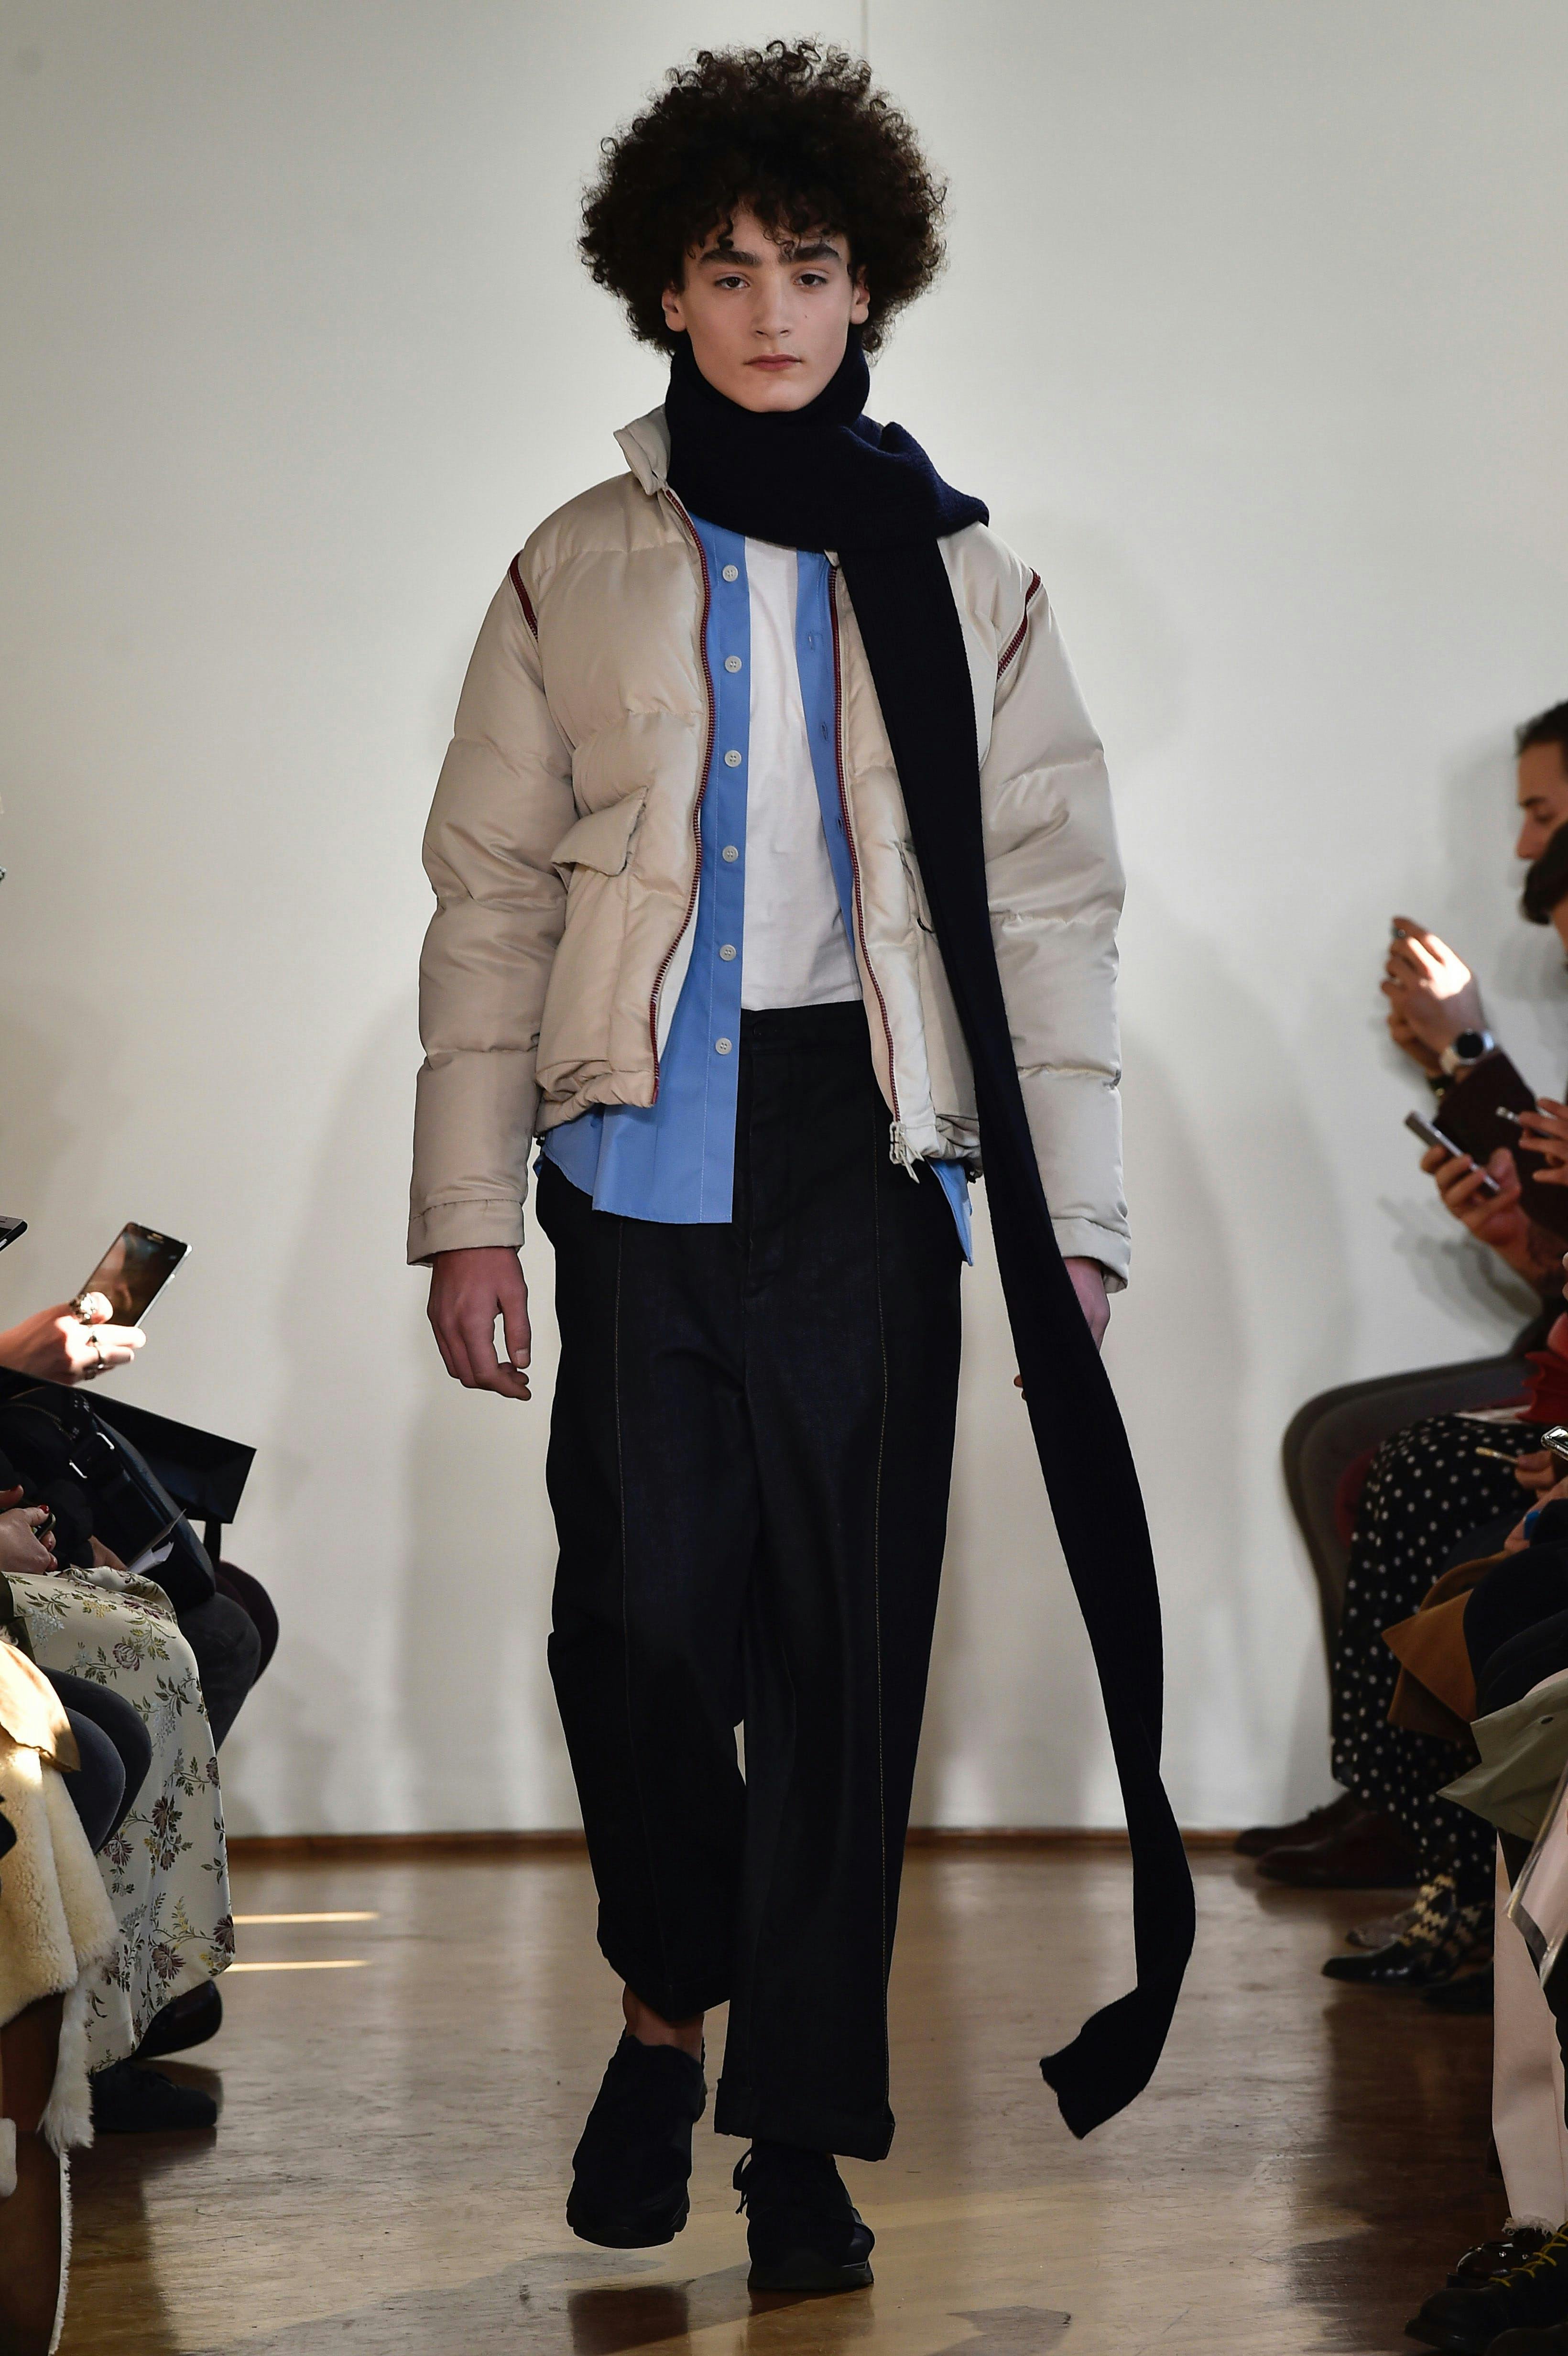 clothing apparel person human coat overcoat